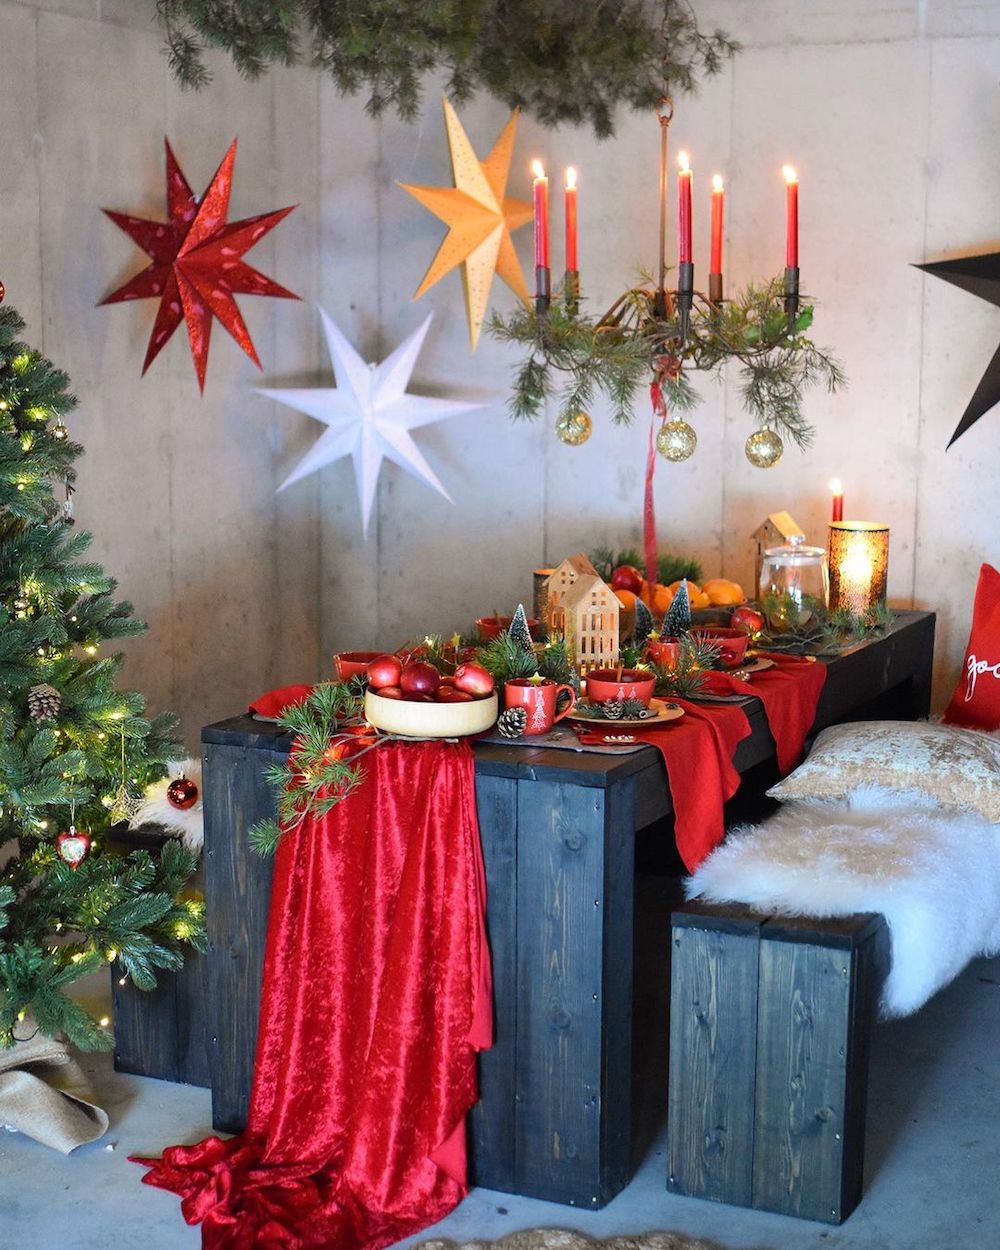 In 17 1 #Christmas #ChristmasTablescape #DiningRoomDecor #HomeDecor #ChristmasDecorIdeas